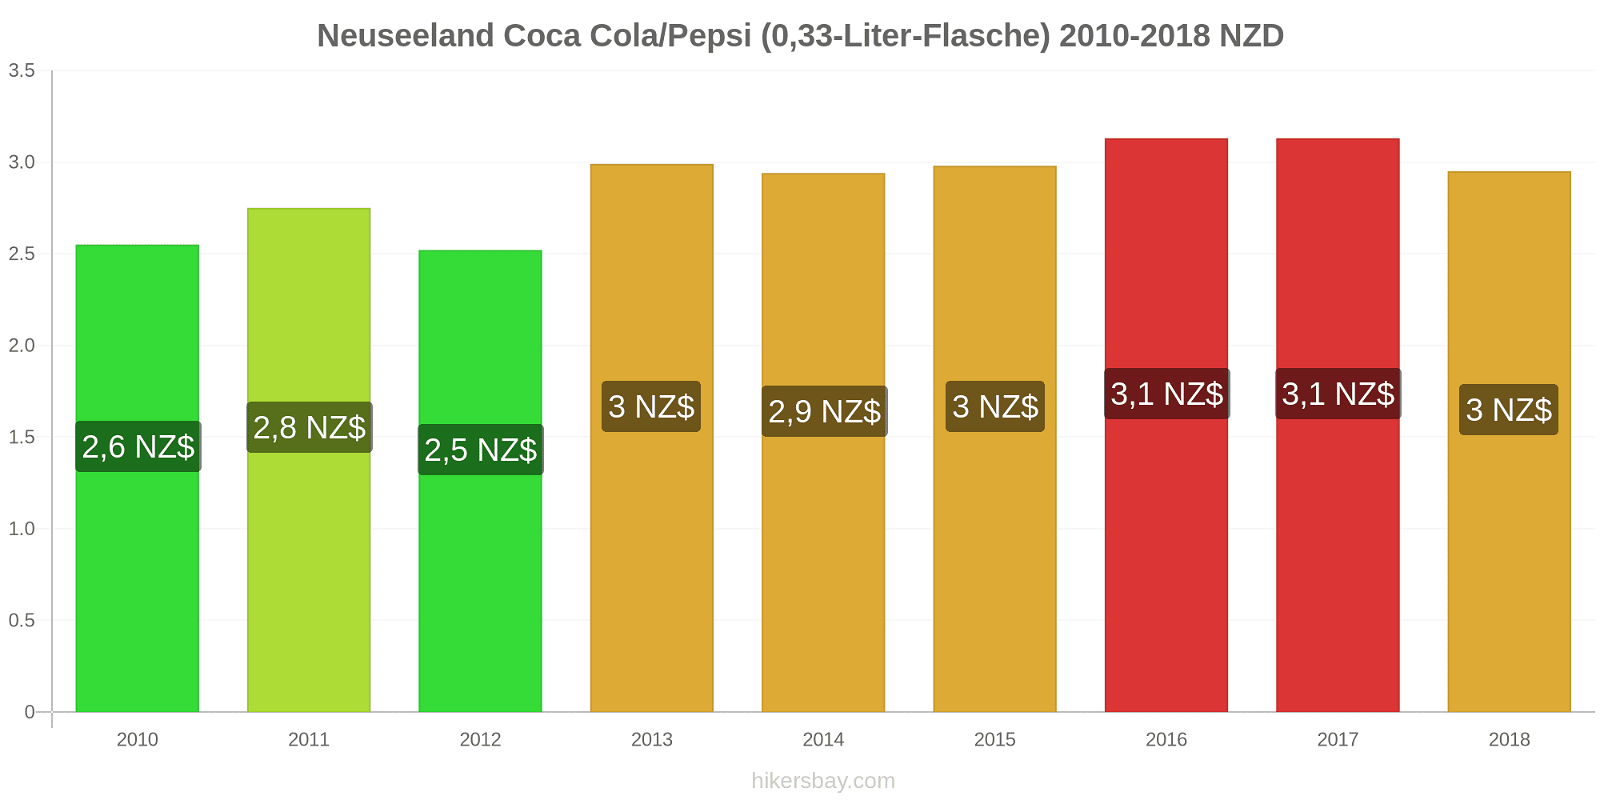 Neuseeland Preisänderungen Coke/Pepsi (0,33-Liter-Flasche) hikersbay.com